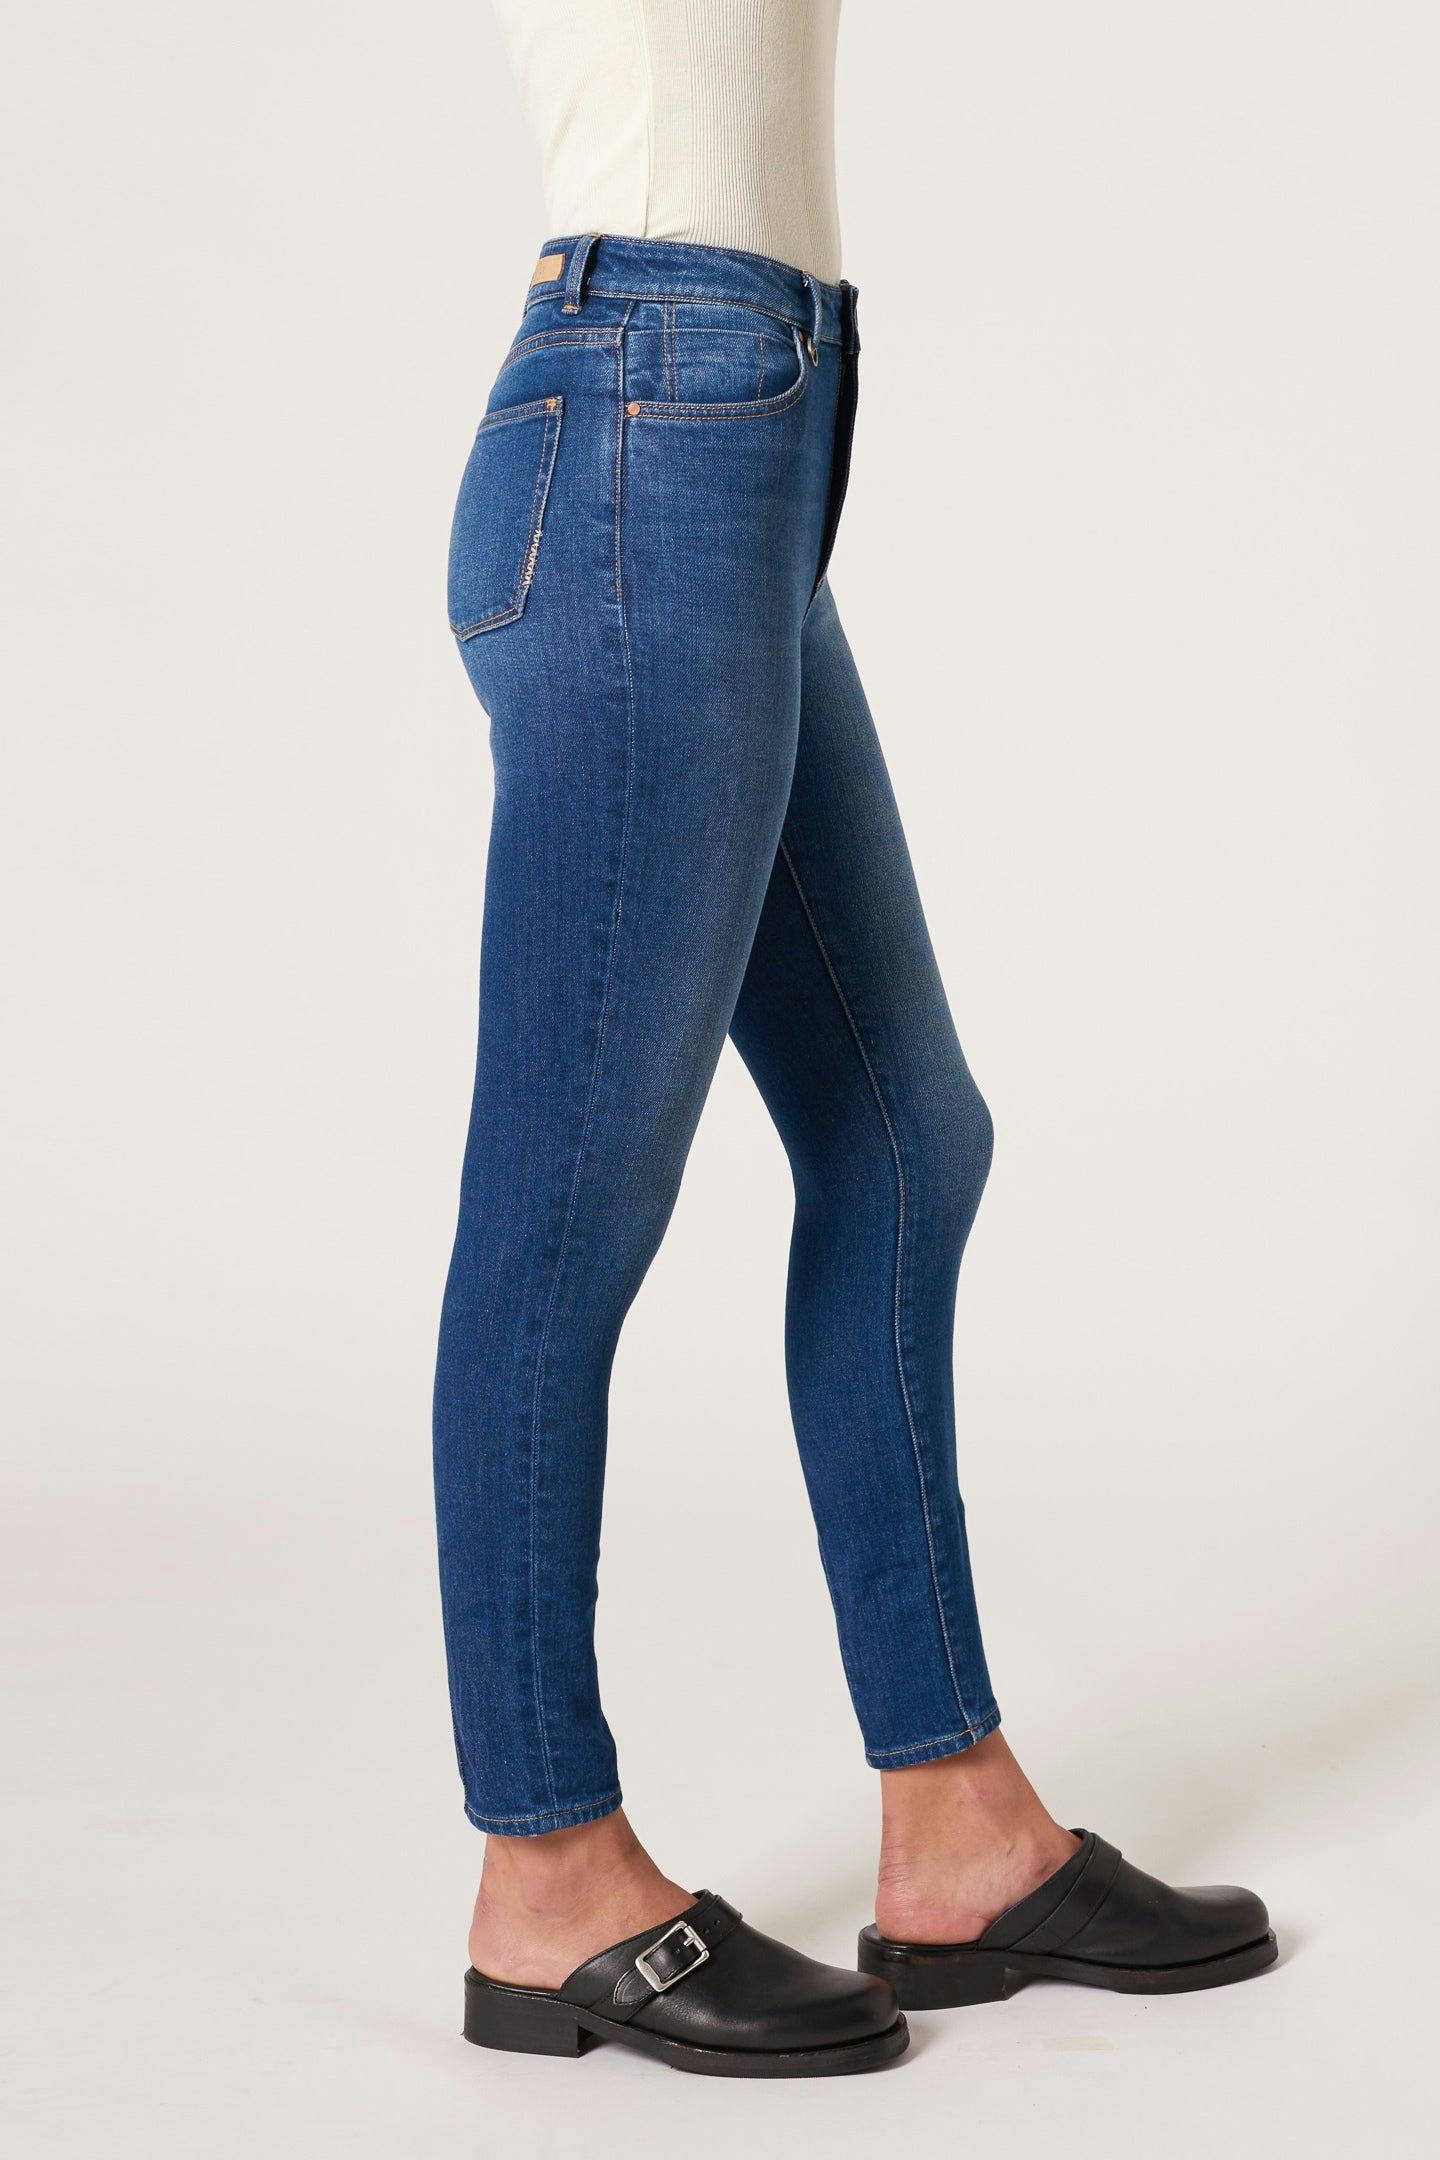 Marilyn Skinny - Hoxton Neuw dark darkblue womens-jeans 